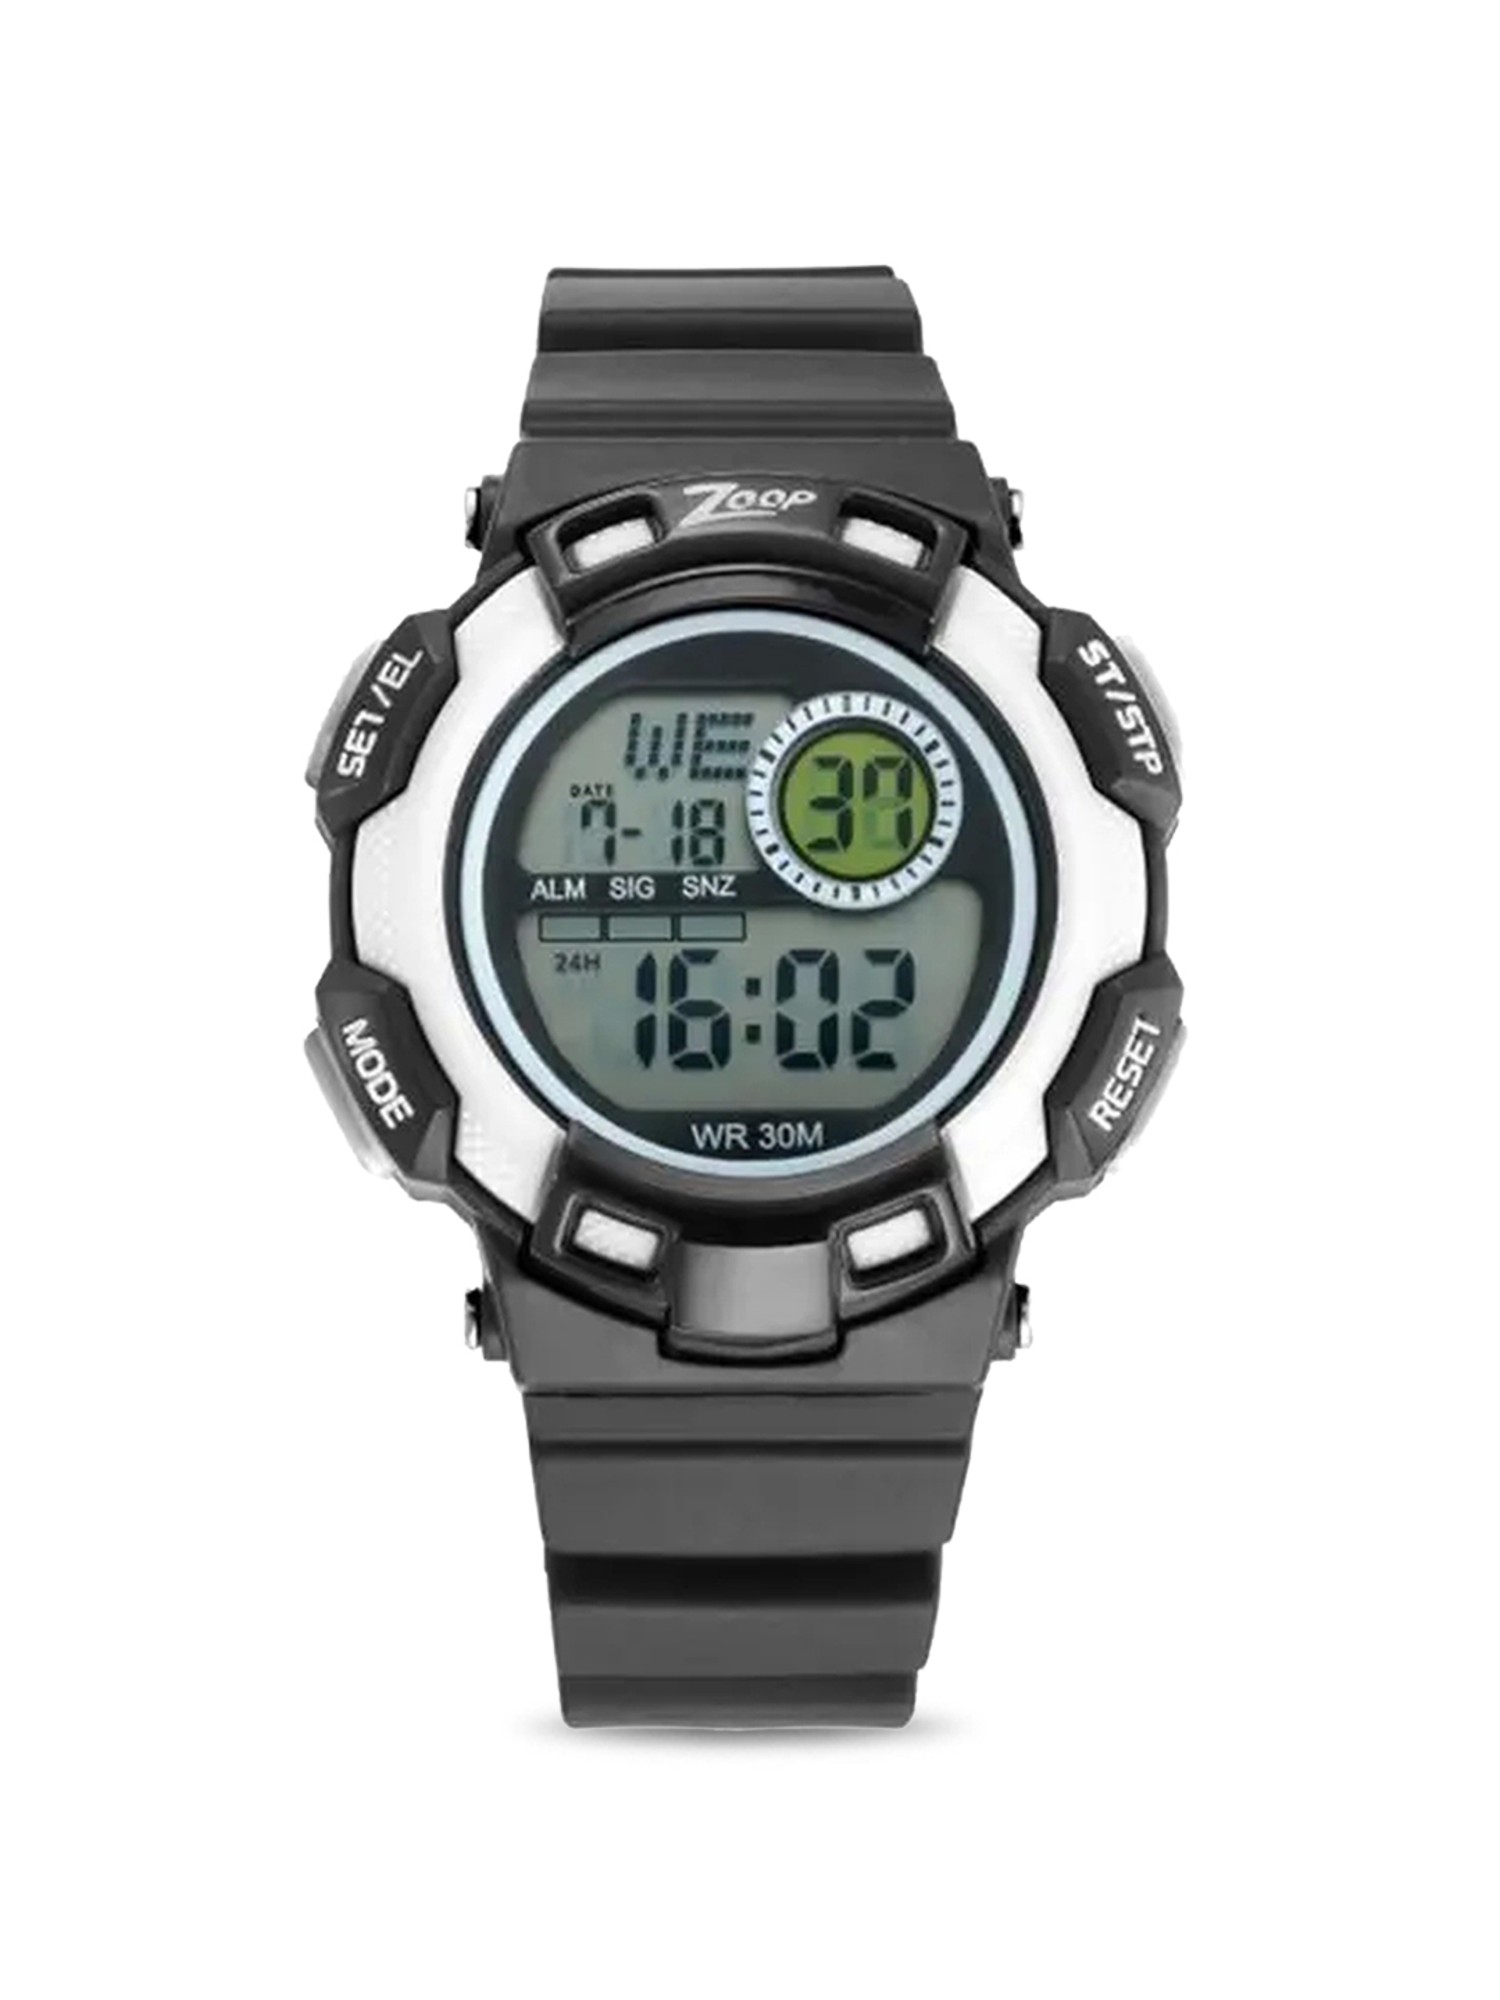 Search cool zoop watches | Alight Watch Co. 7878786878, Rajkot-hanic.com.vn